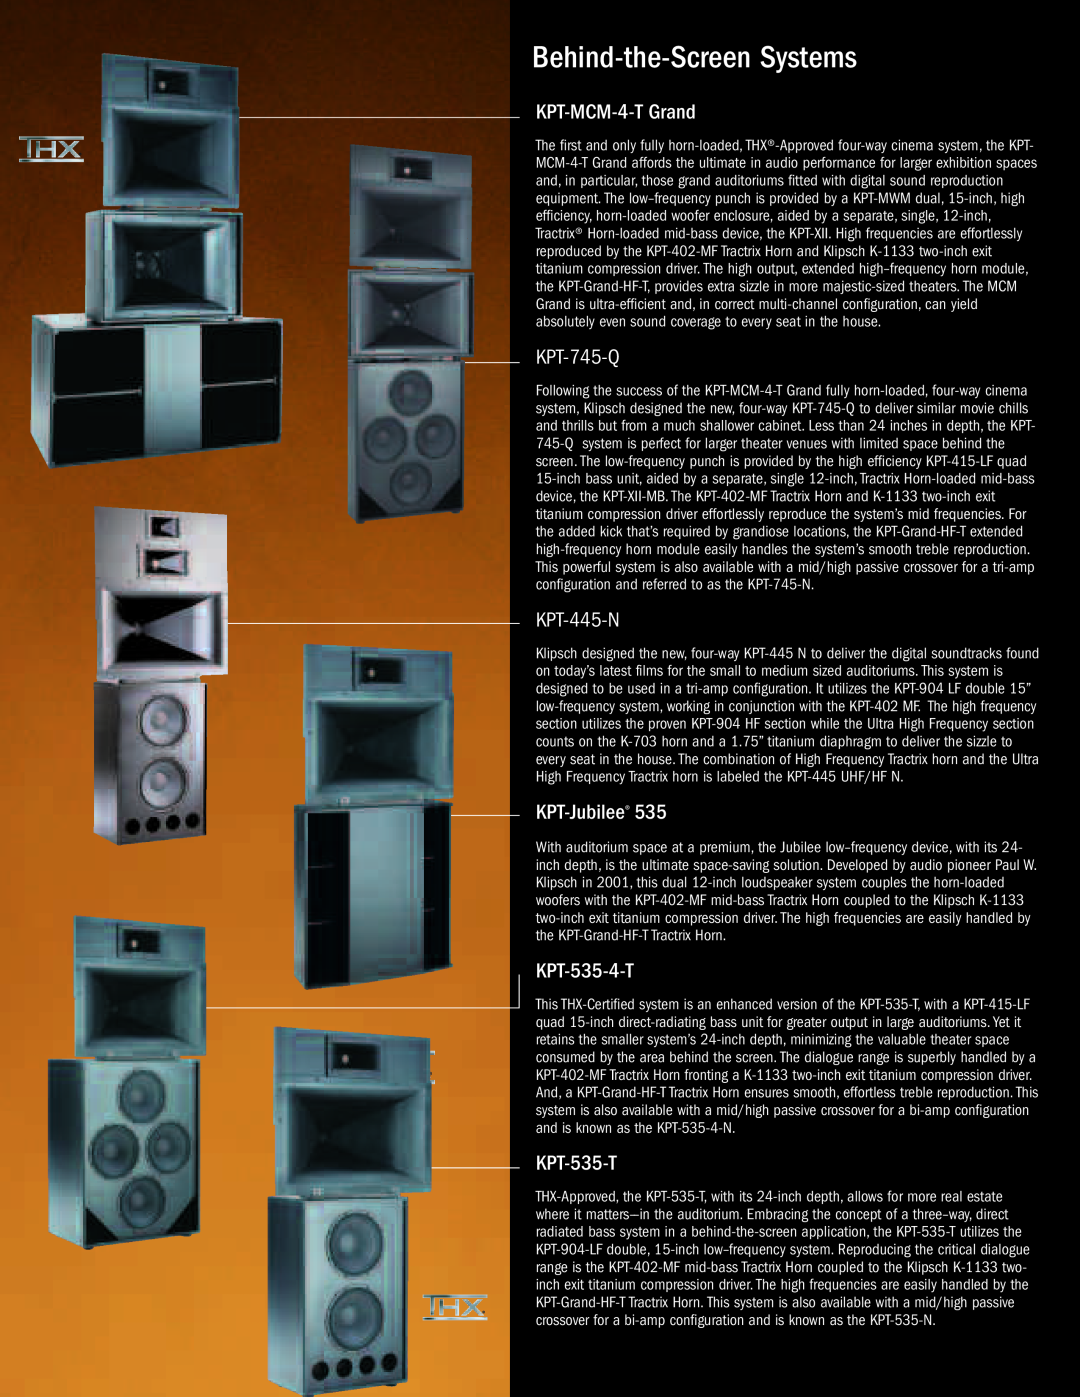 Klipsch Loudspeaker System Behind-the-ScreenSystems, KPT-MCM-4-TGrand, KPT-745-Q, KPT-445-N, KPT-Jubilee, KPT-535-4-T 